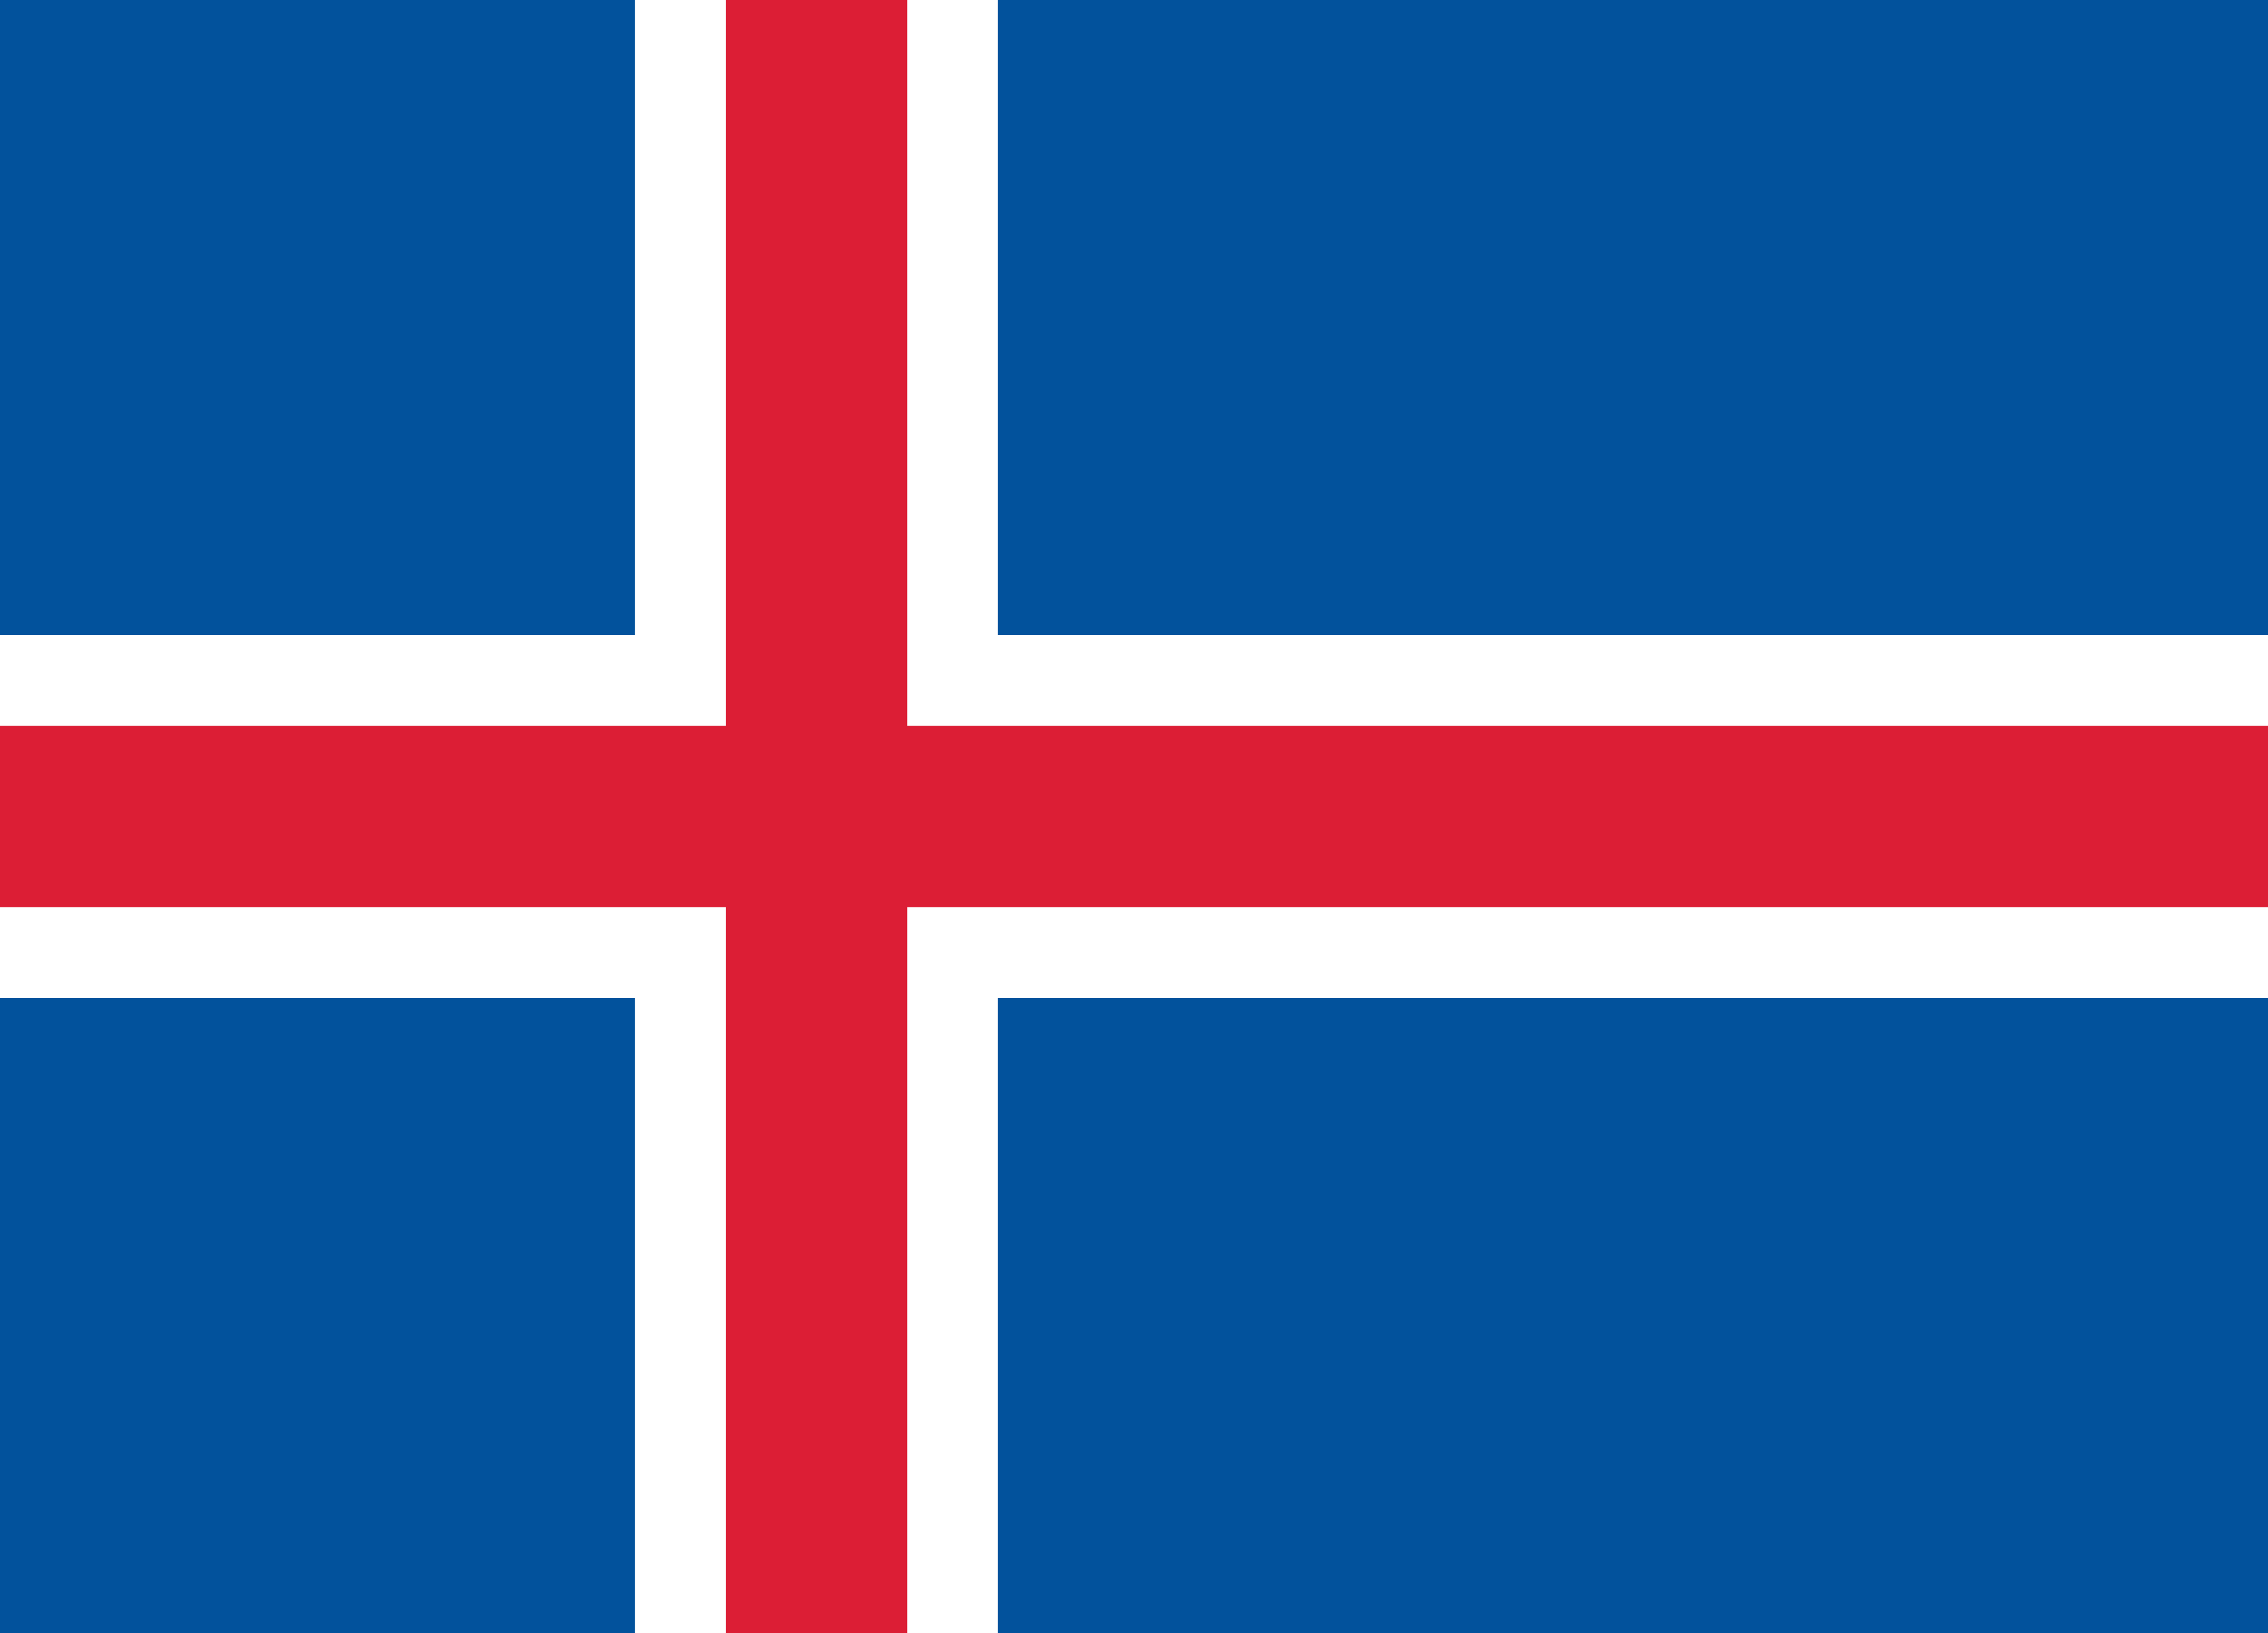 Iceland Flag Image - Free Download